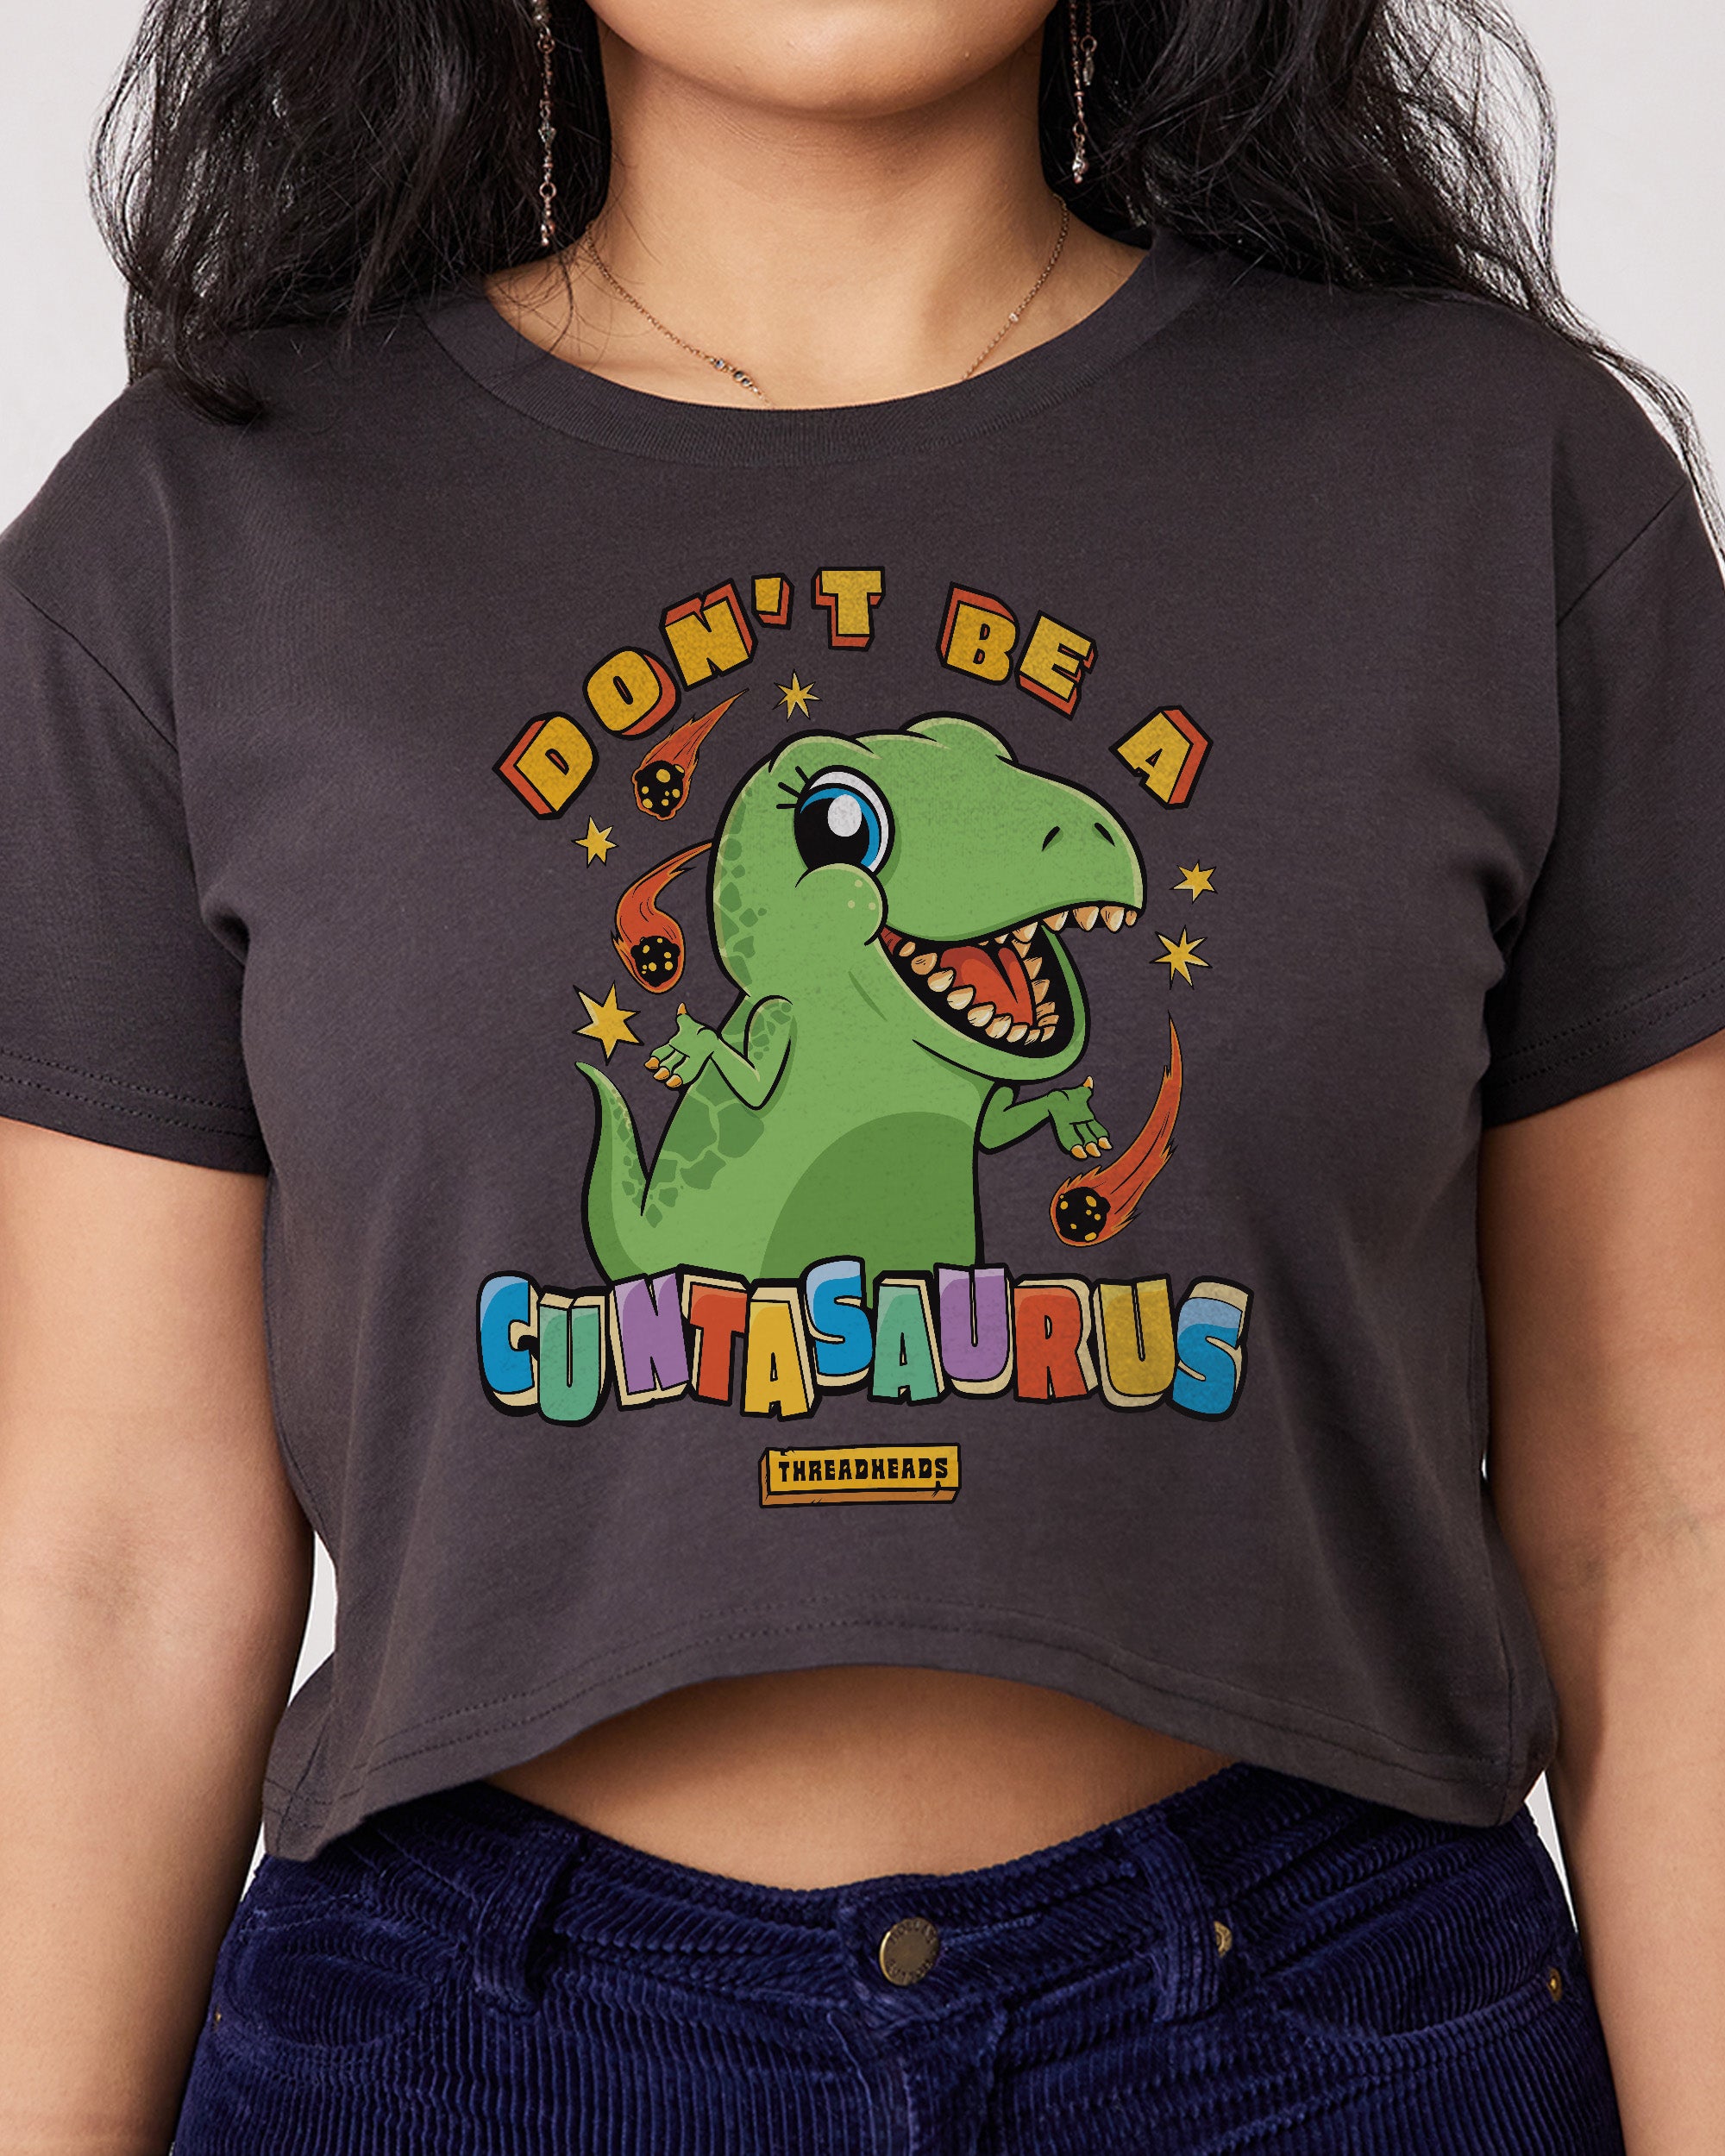 Don't Be a Cuntasaurus Crop Tee